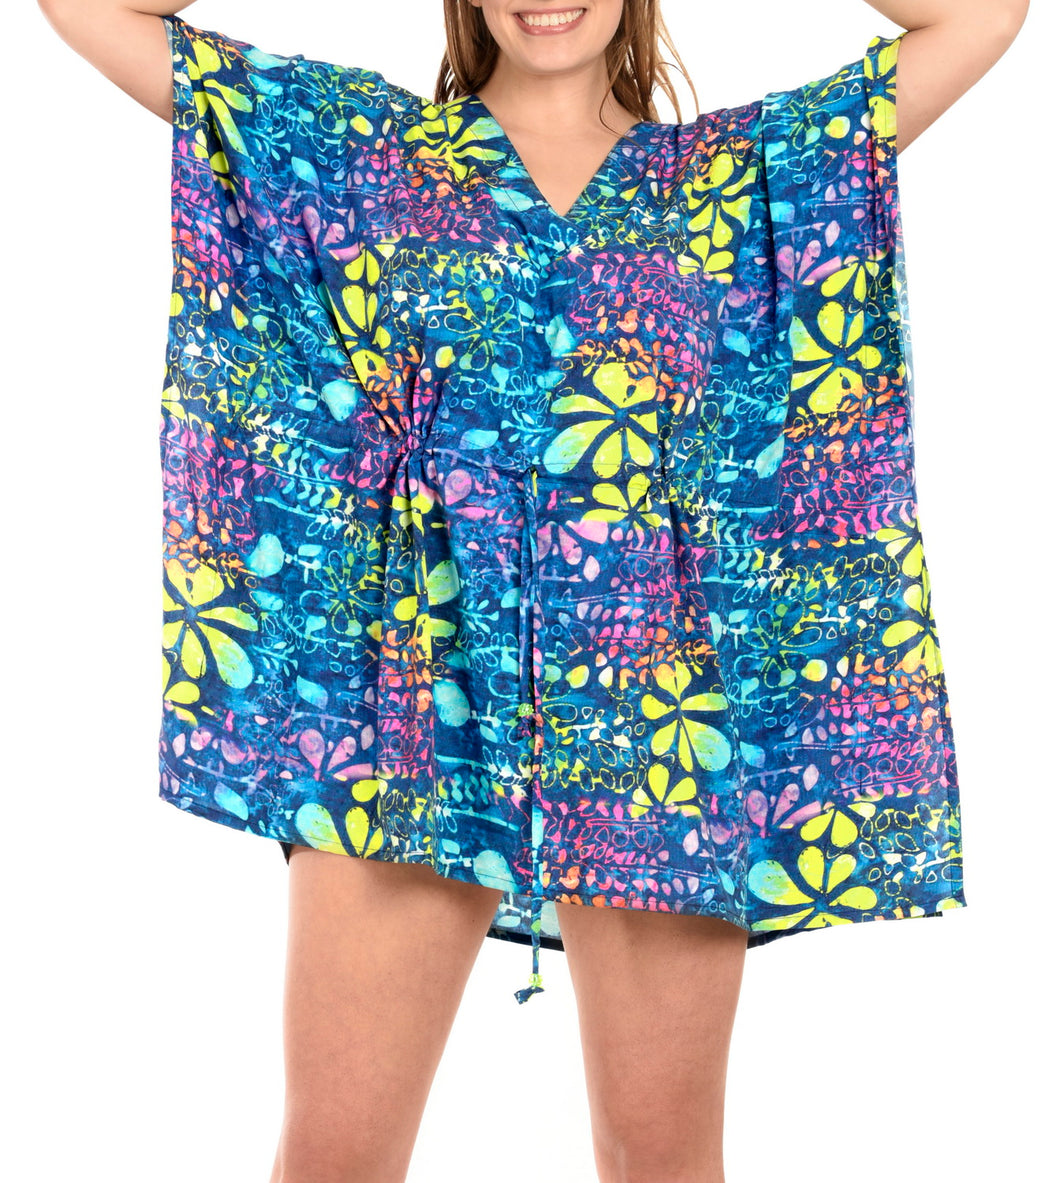 la-leela-bikni-swimwear-soft-fabric-digital-hd-print-beach-swim-cover-up-osfm-14-28-l-4x-multicolor_3713